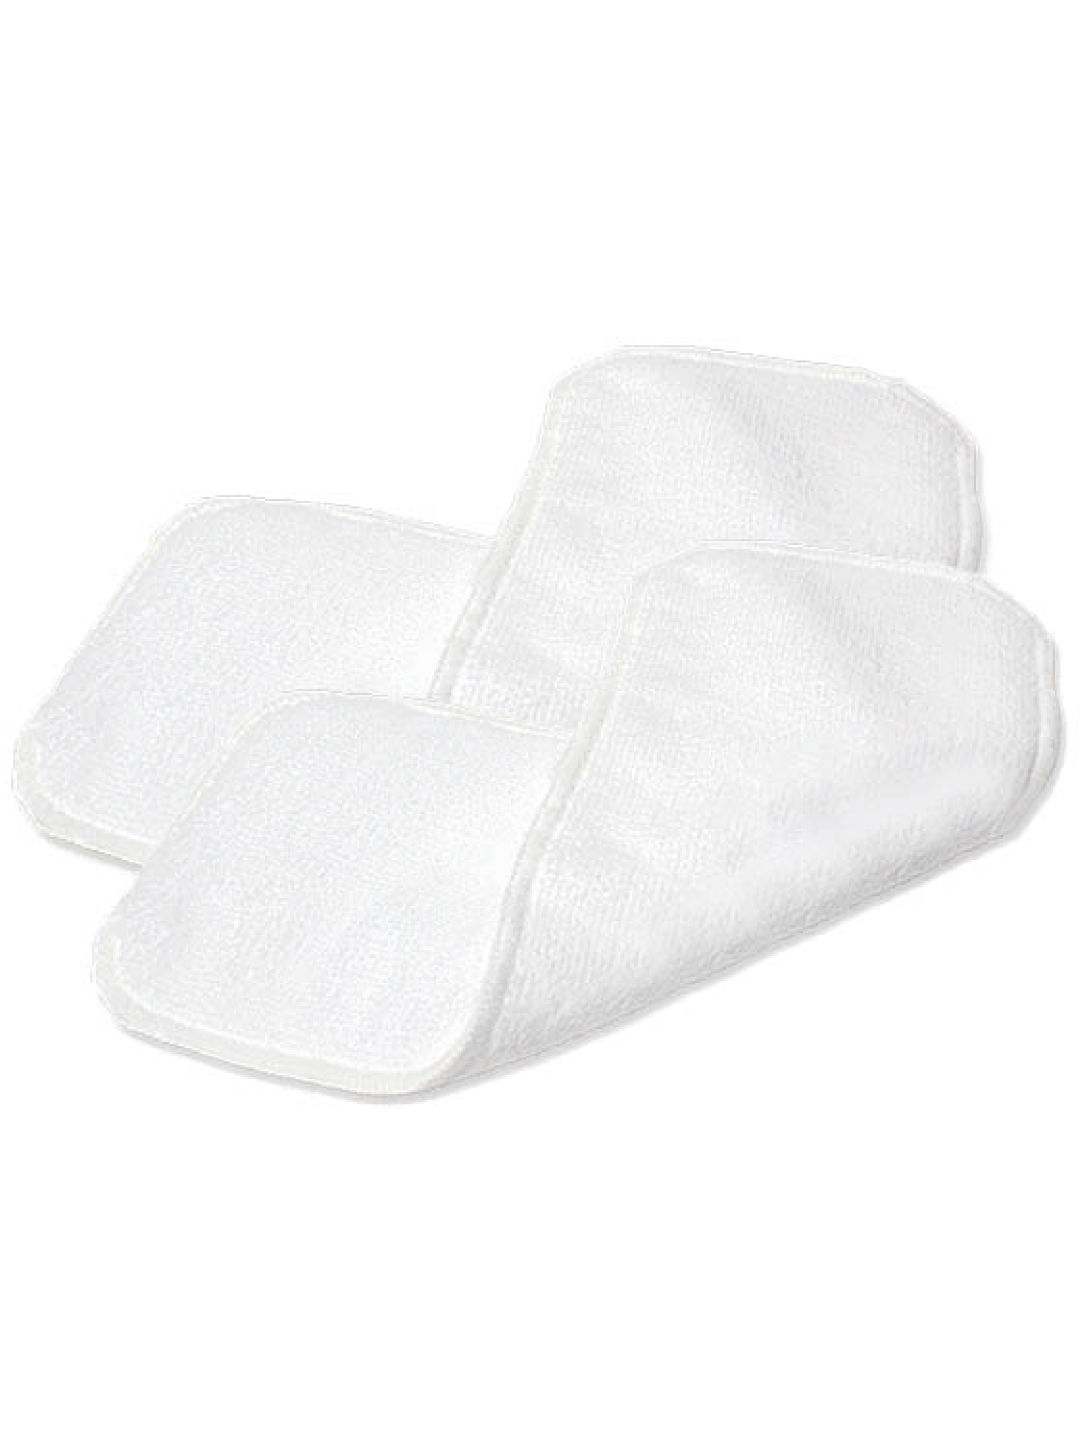 Little Steps Insert Pads for Reusable Cloth Diaper (2 pcs)